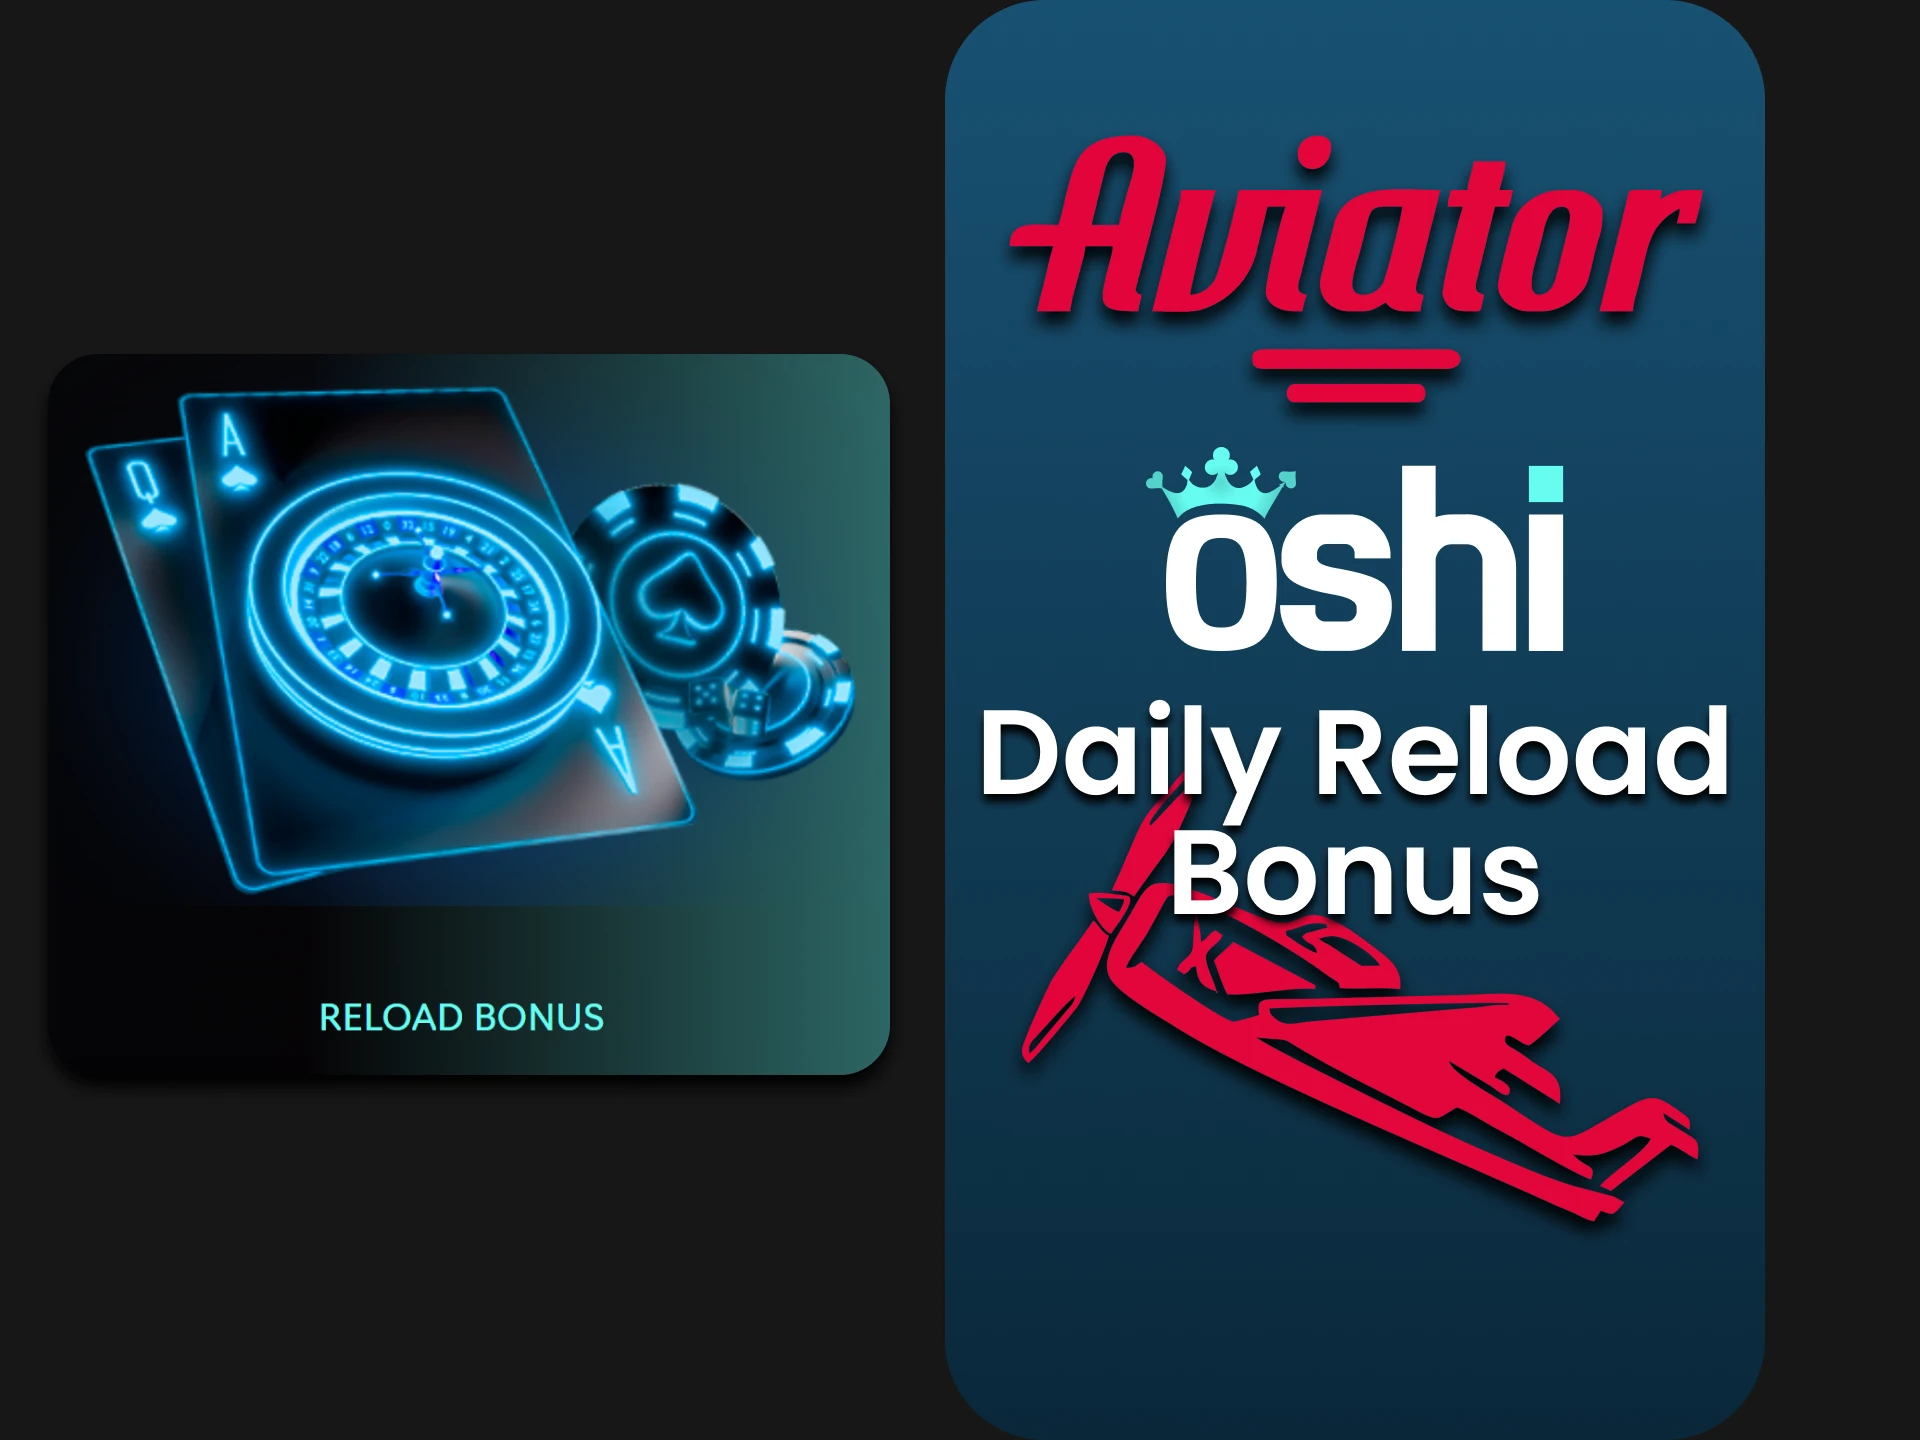 Ochi Casino gives a Reload bonus for the Aviator.